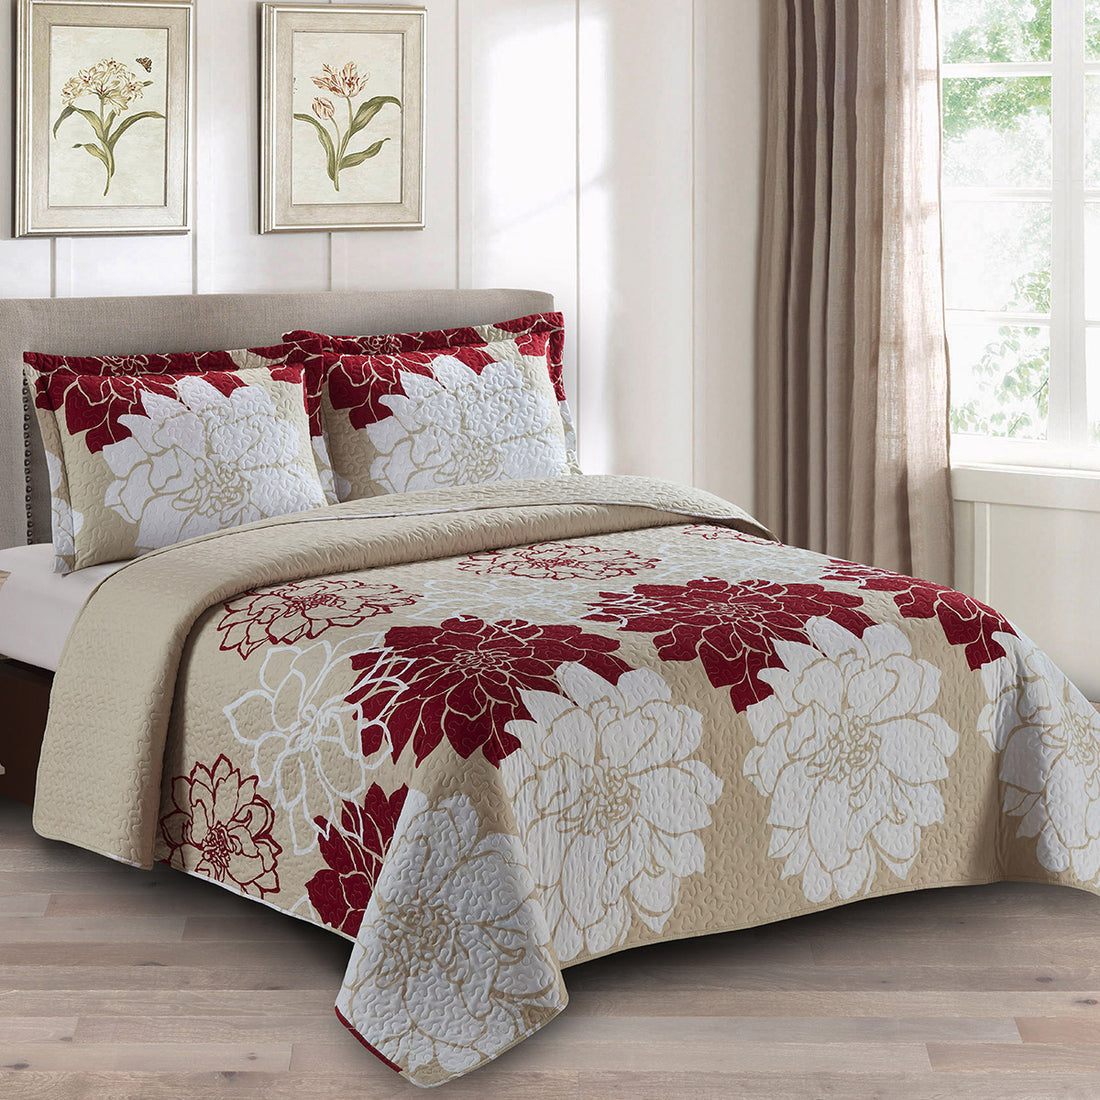 helena burgundy reversible oversize quilt bed spread set